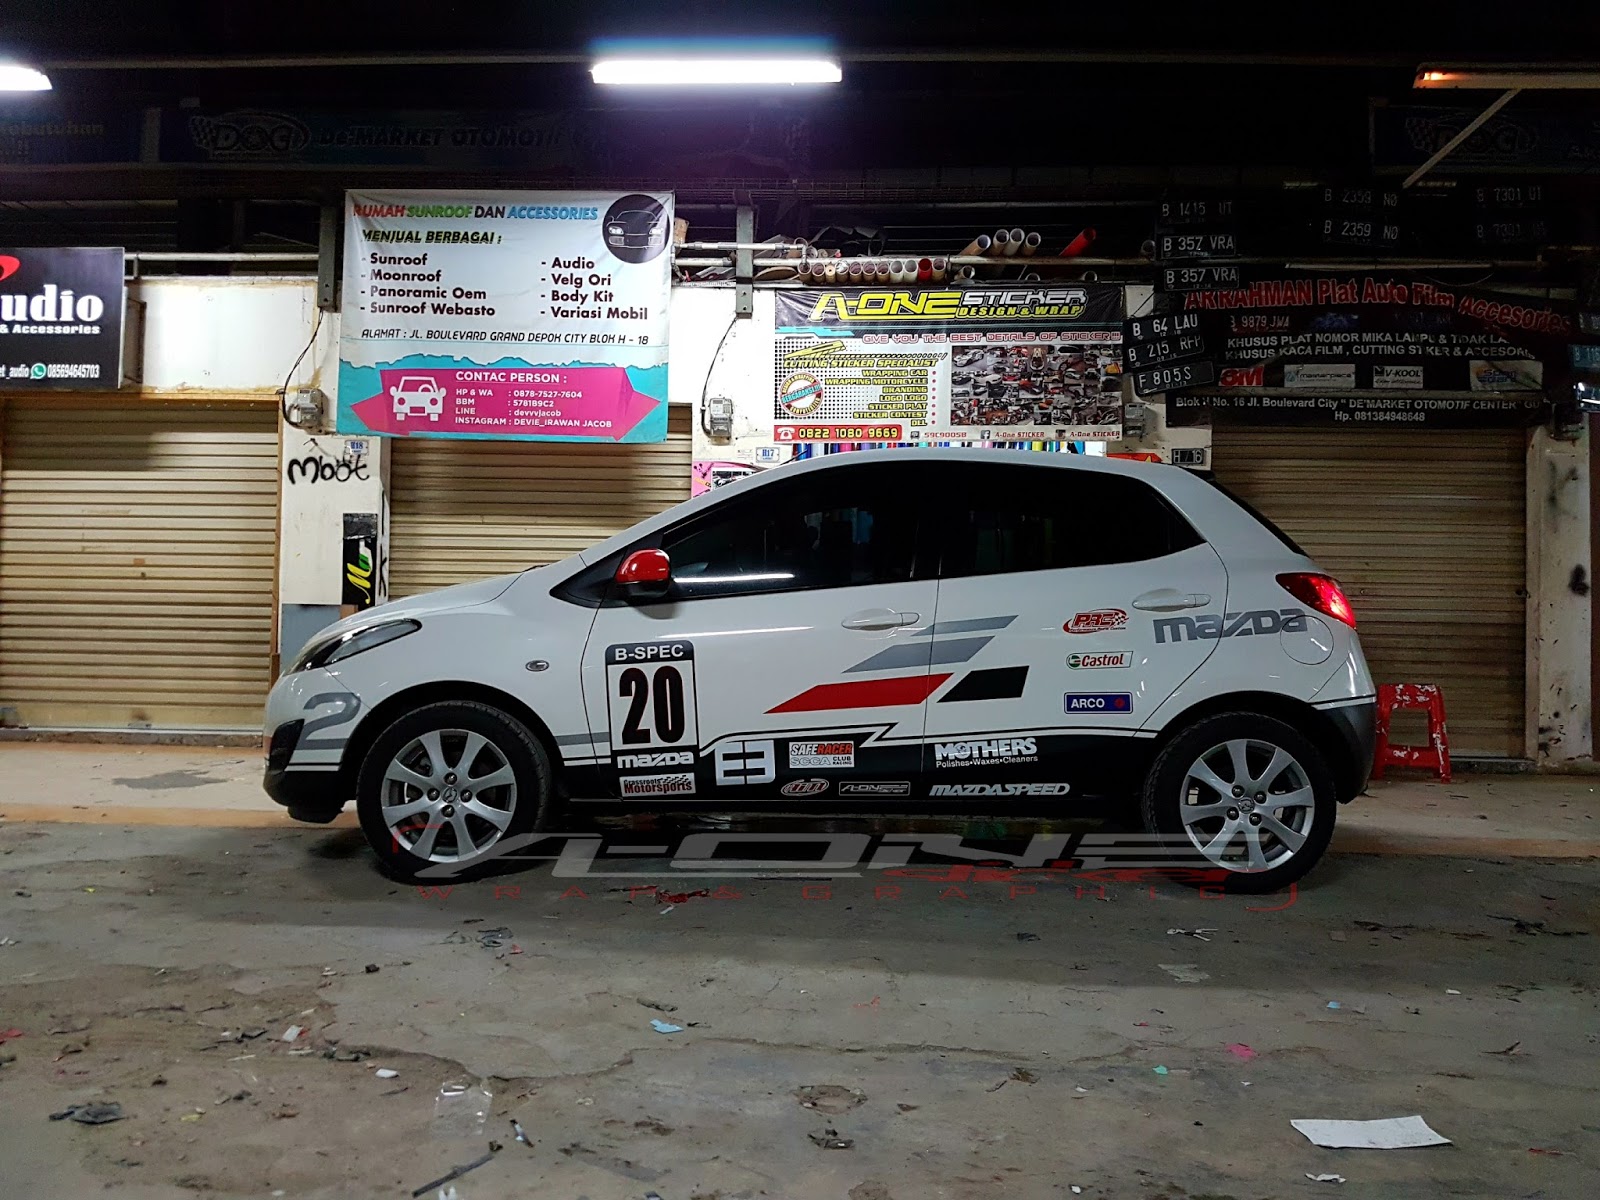 41 Top Ide Sticker Cutting Mobil Bogor